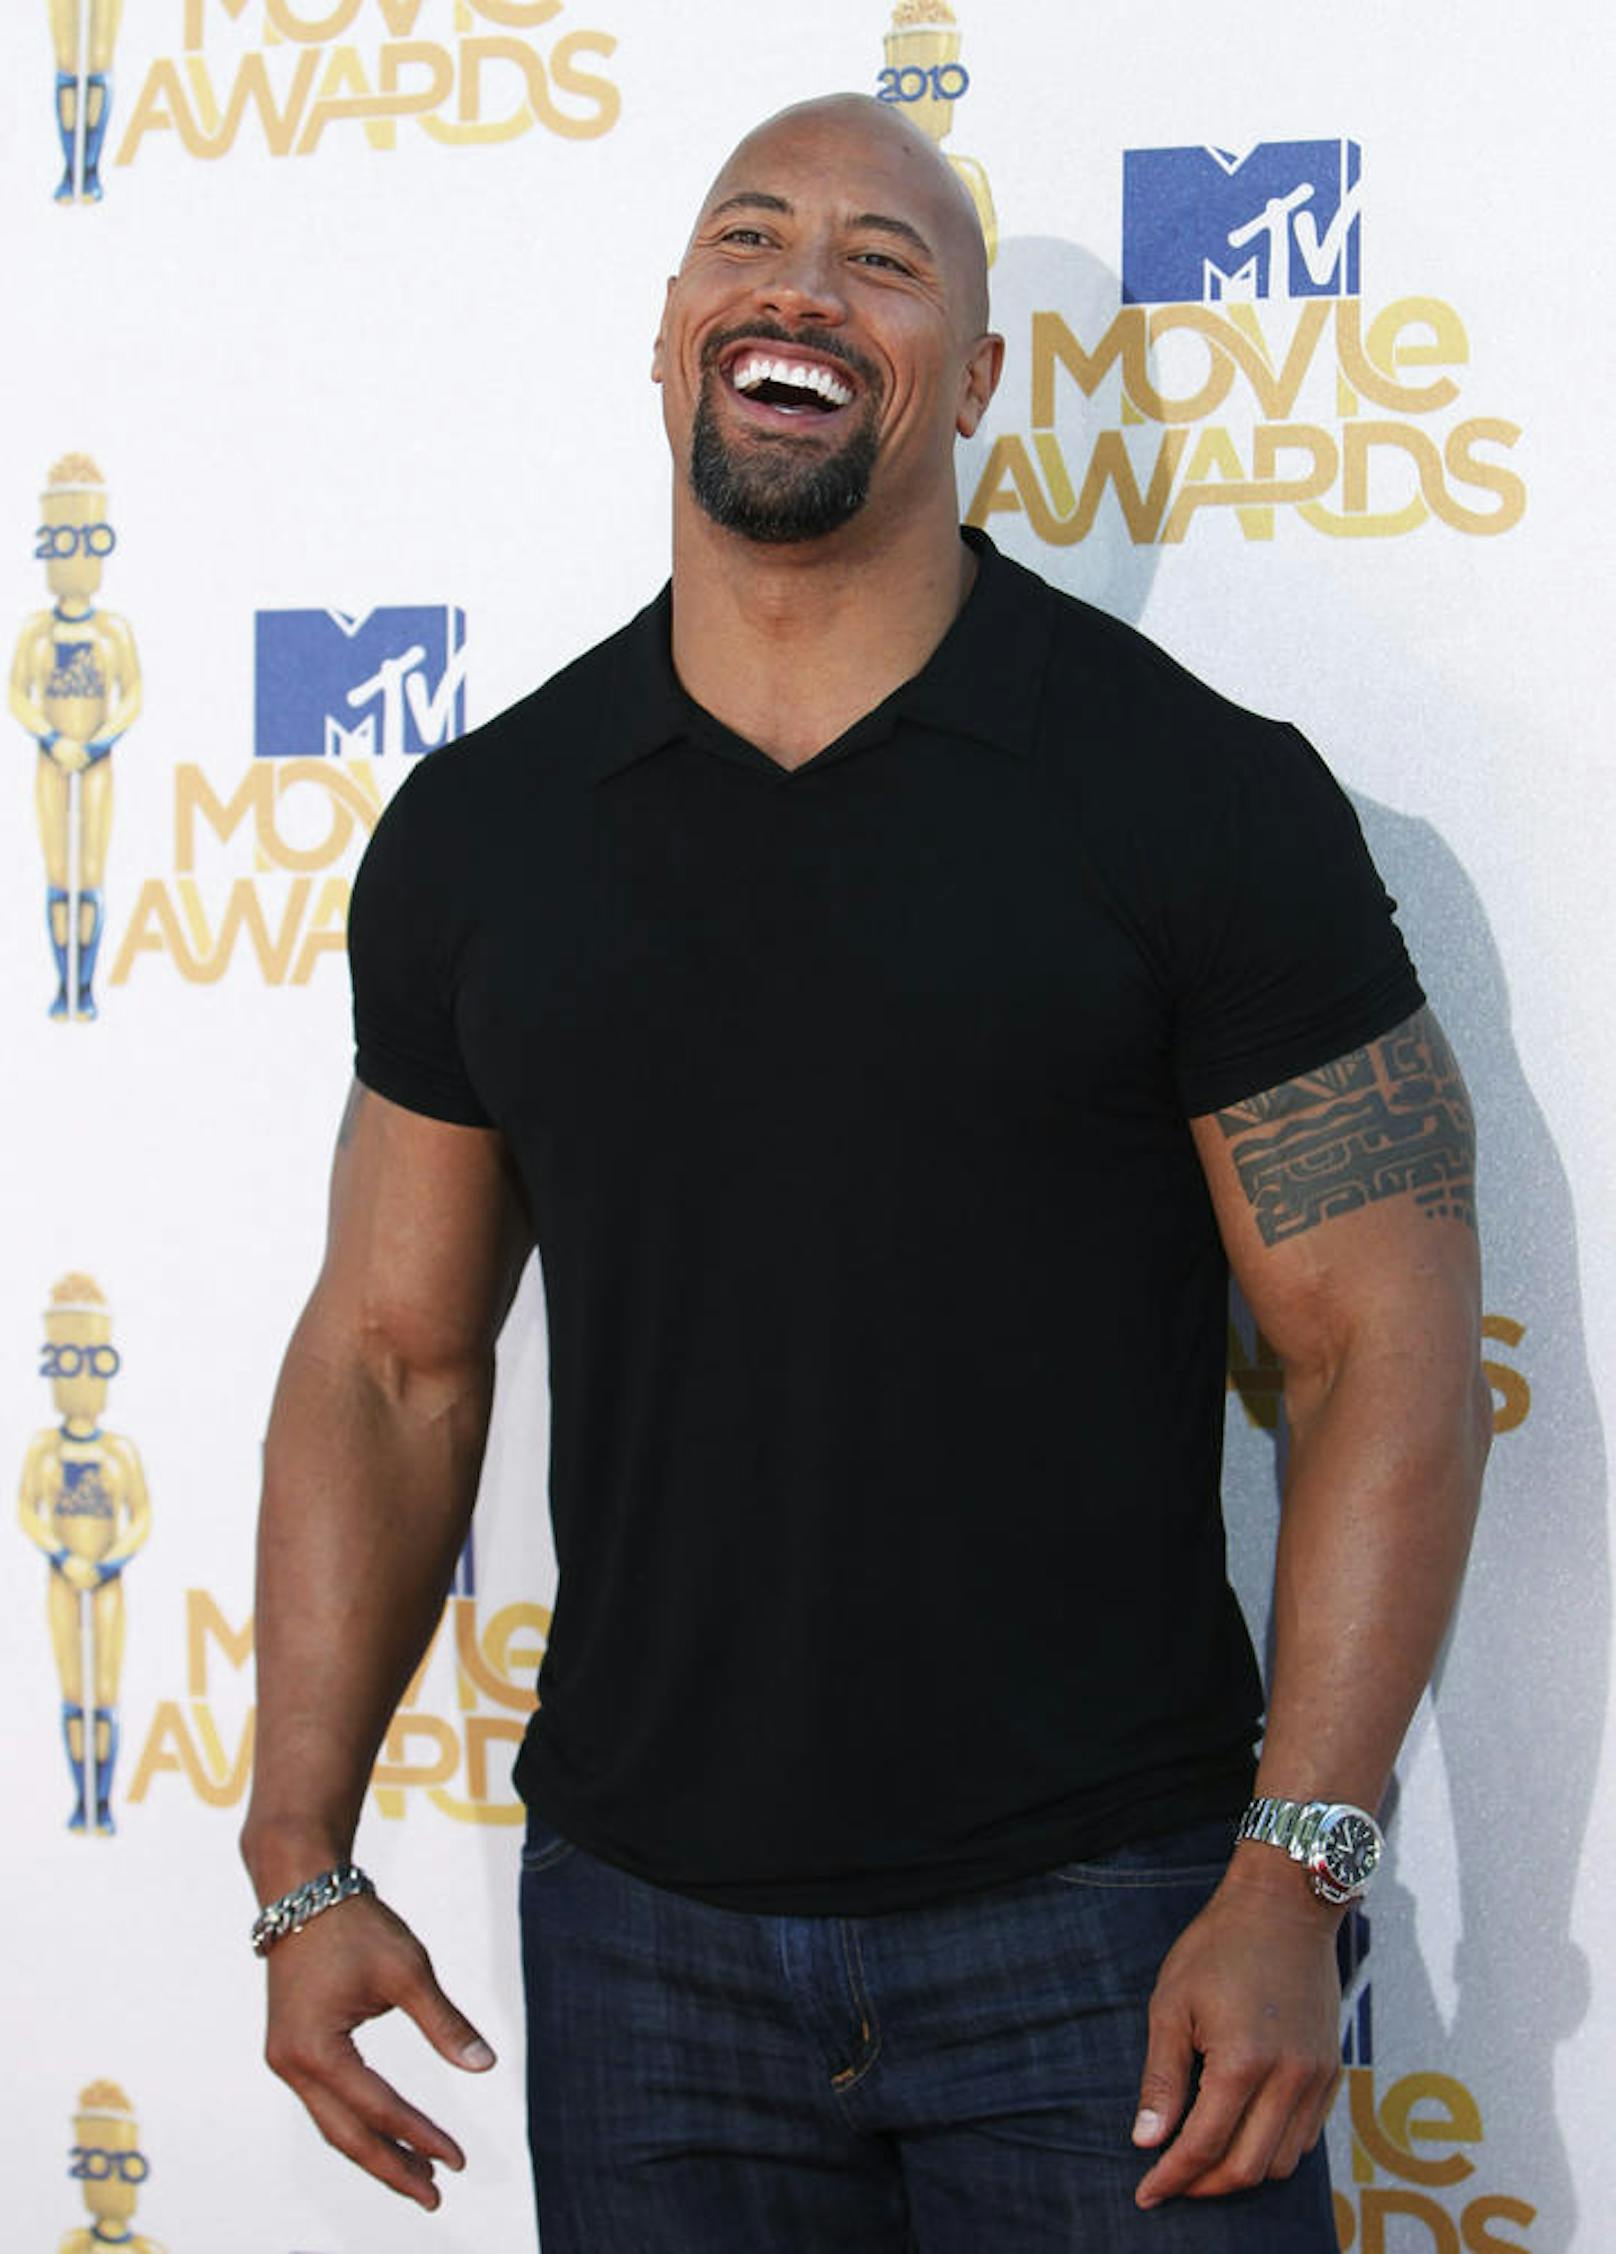 Dwayne "The Rock" Johnson 2010 bei den MTV Movie Awards in Los Angeles